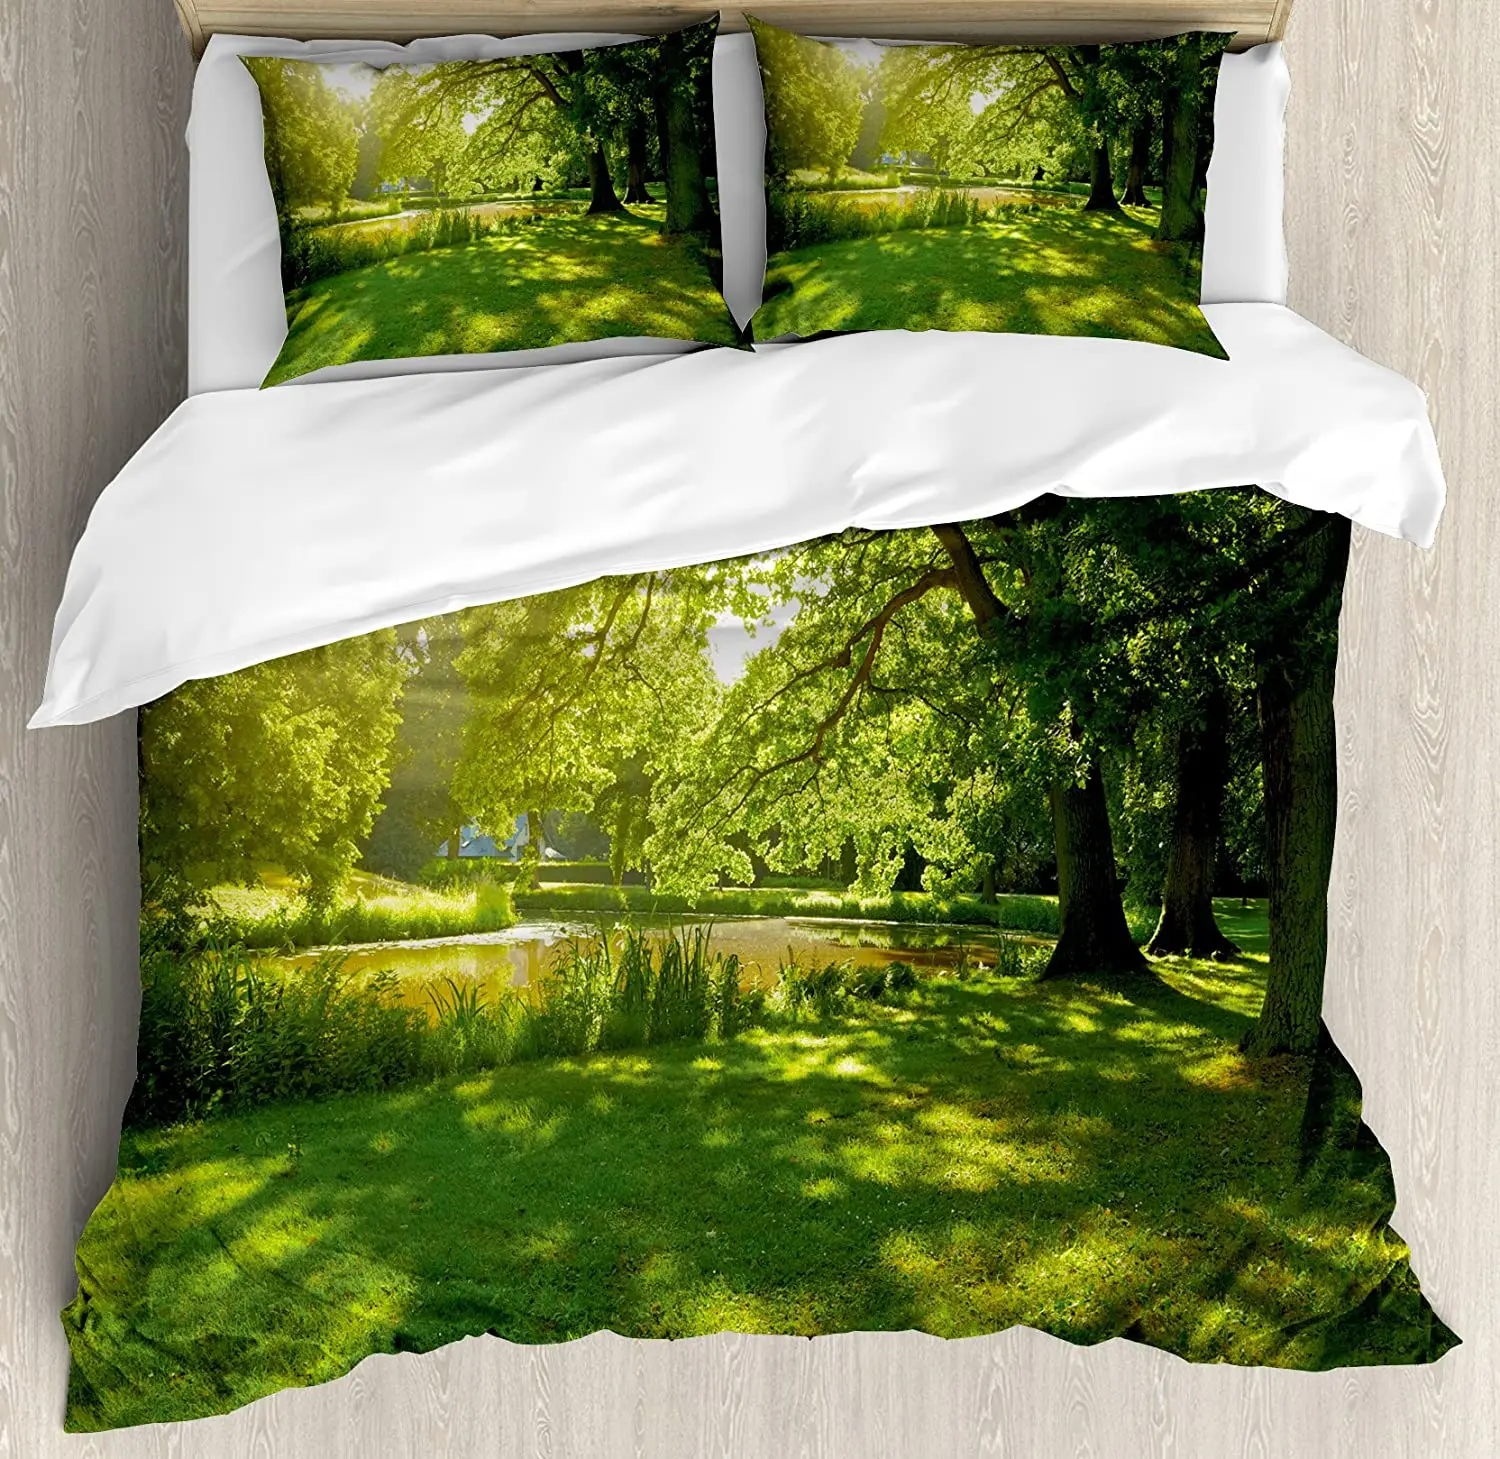 

Green Bedding Set For Bedroom Bed Home Summer Park in Hamburg Germany Trees Sunlight Fores Duvet Cover Quilt Cover Pillowcase